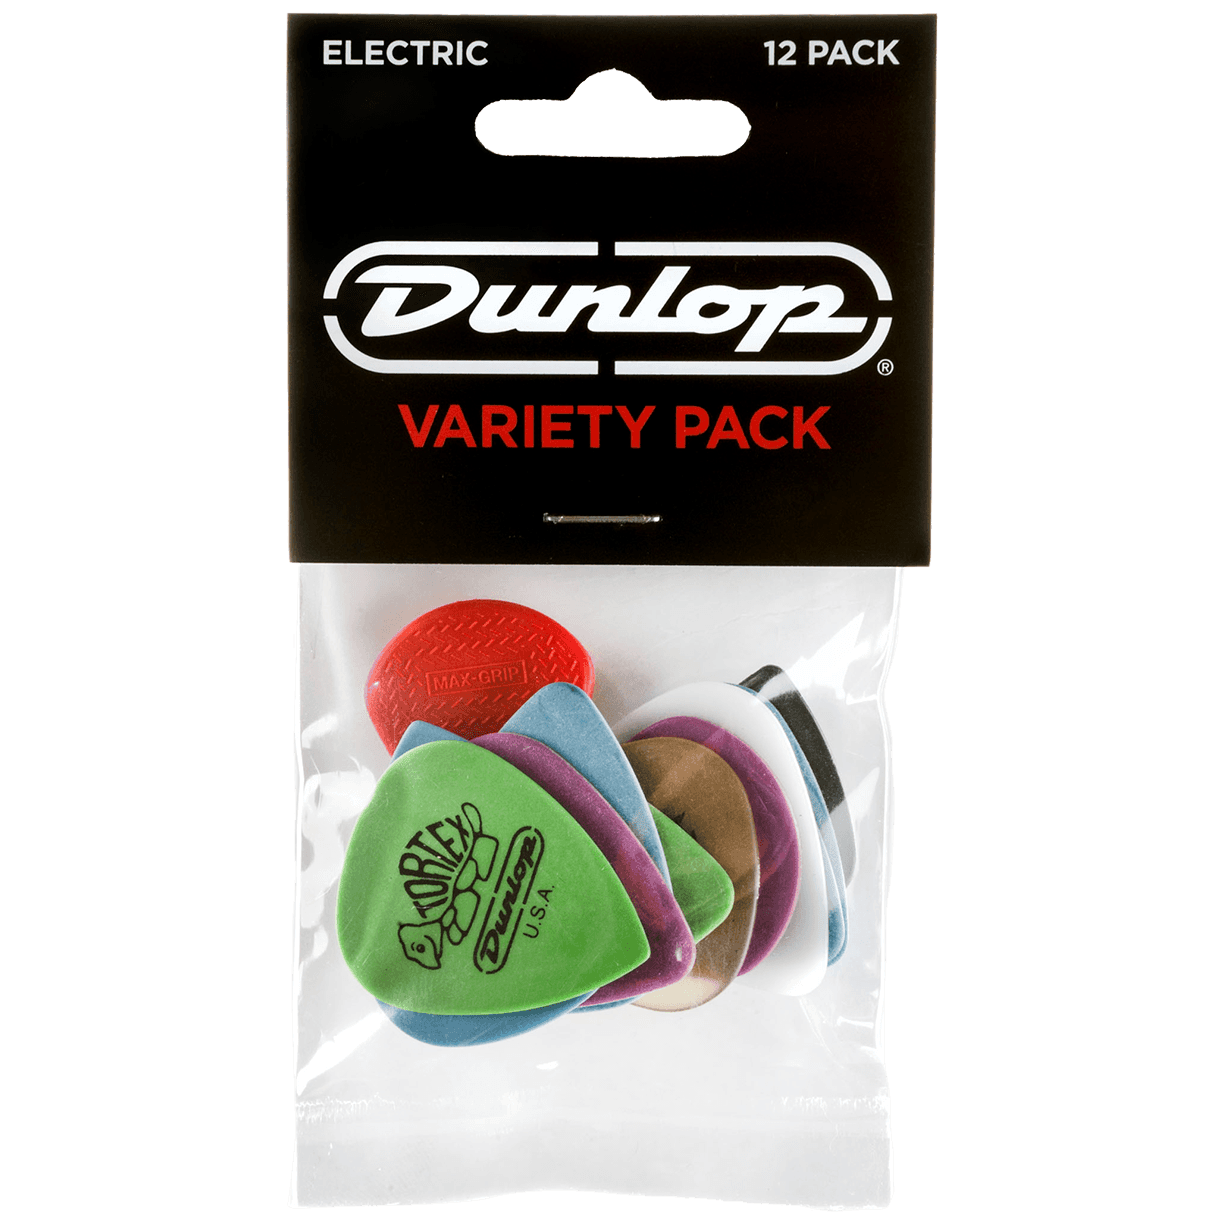 Dunlop Variety Pack Elektric Player's Pack 12 Stück